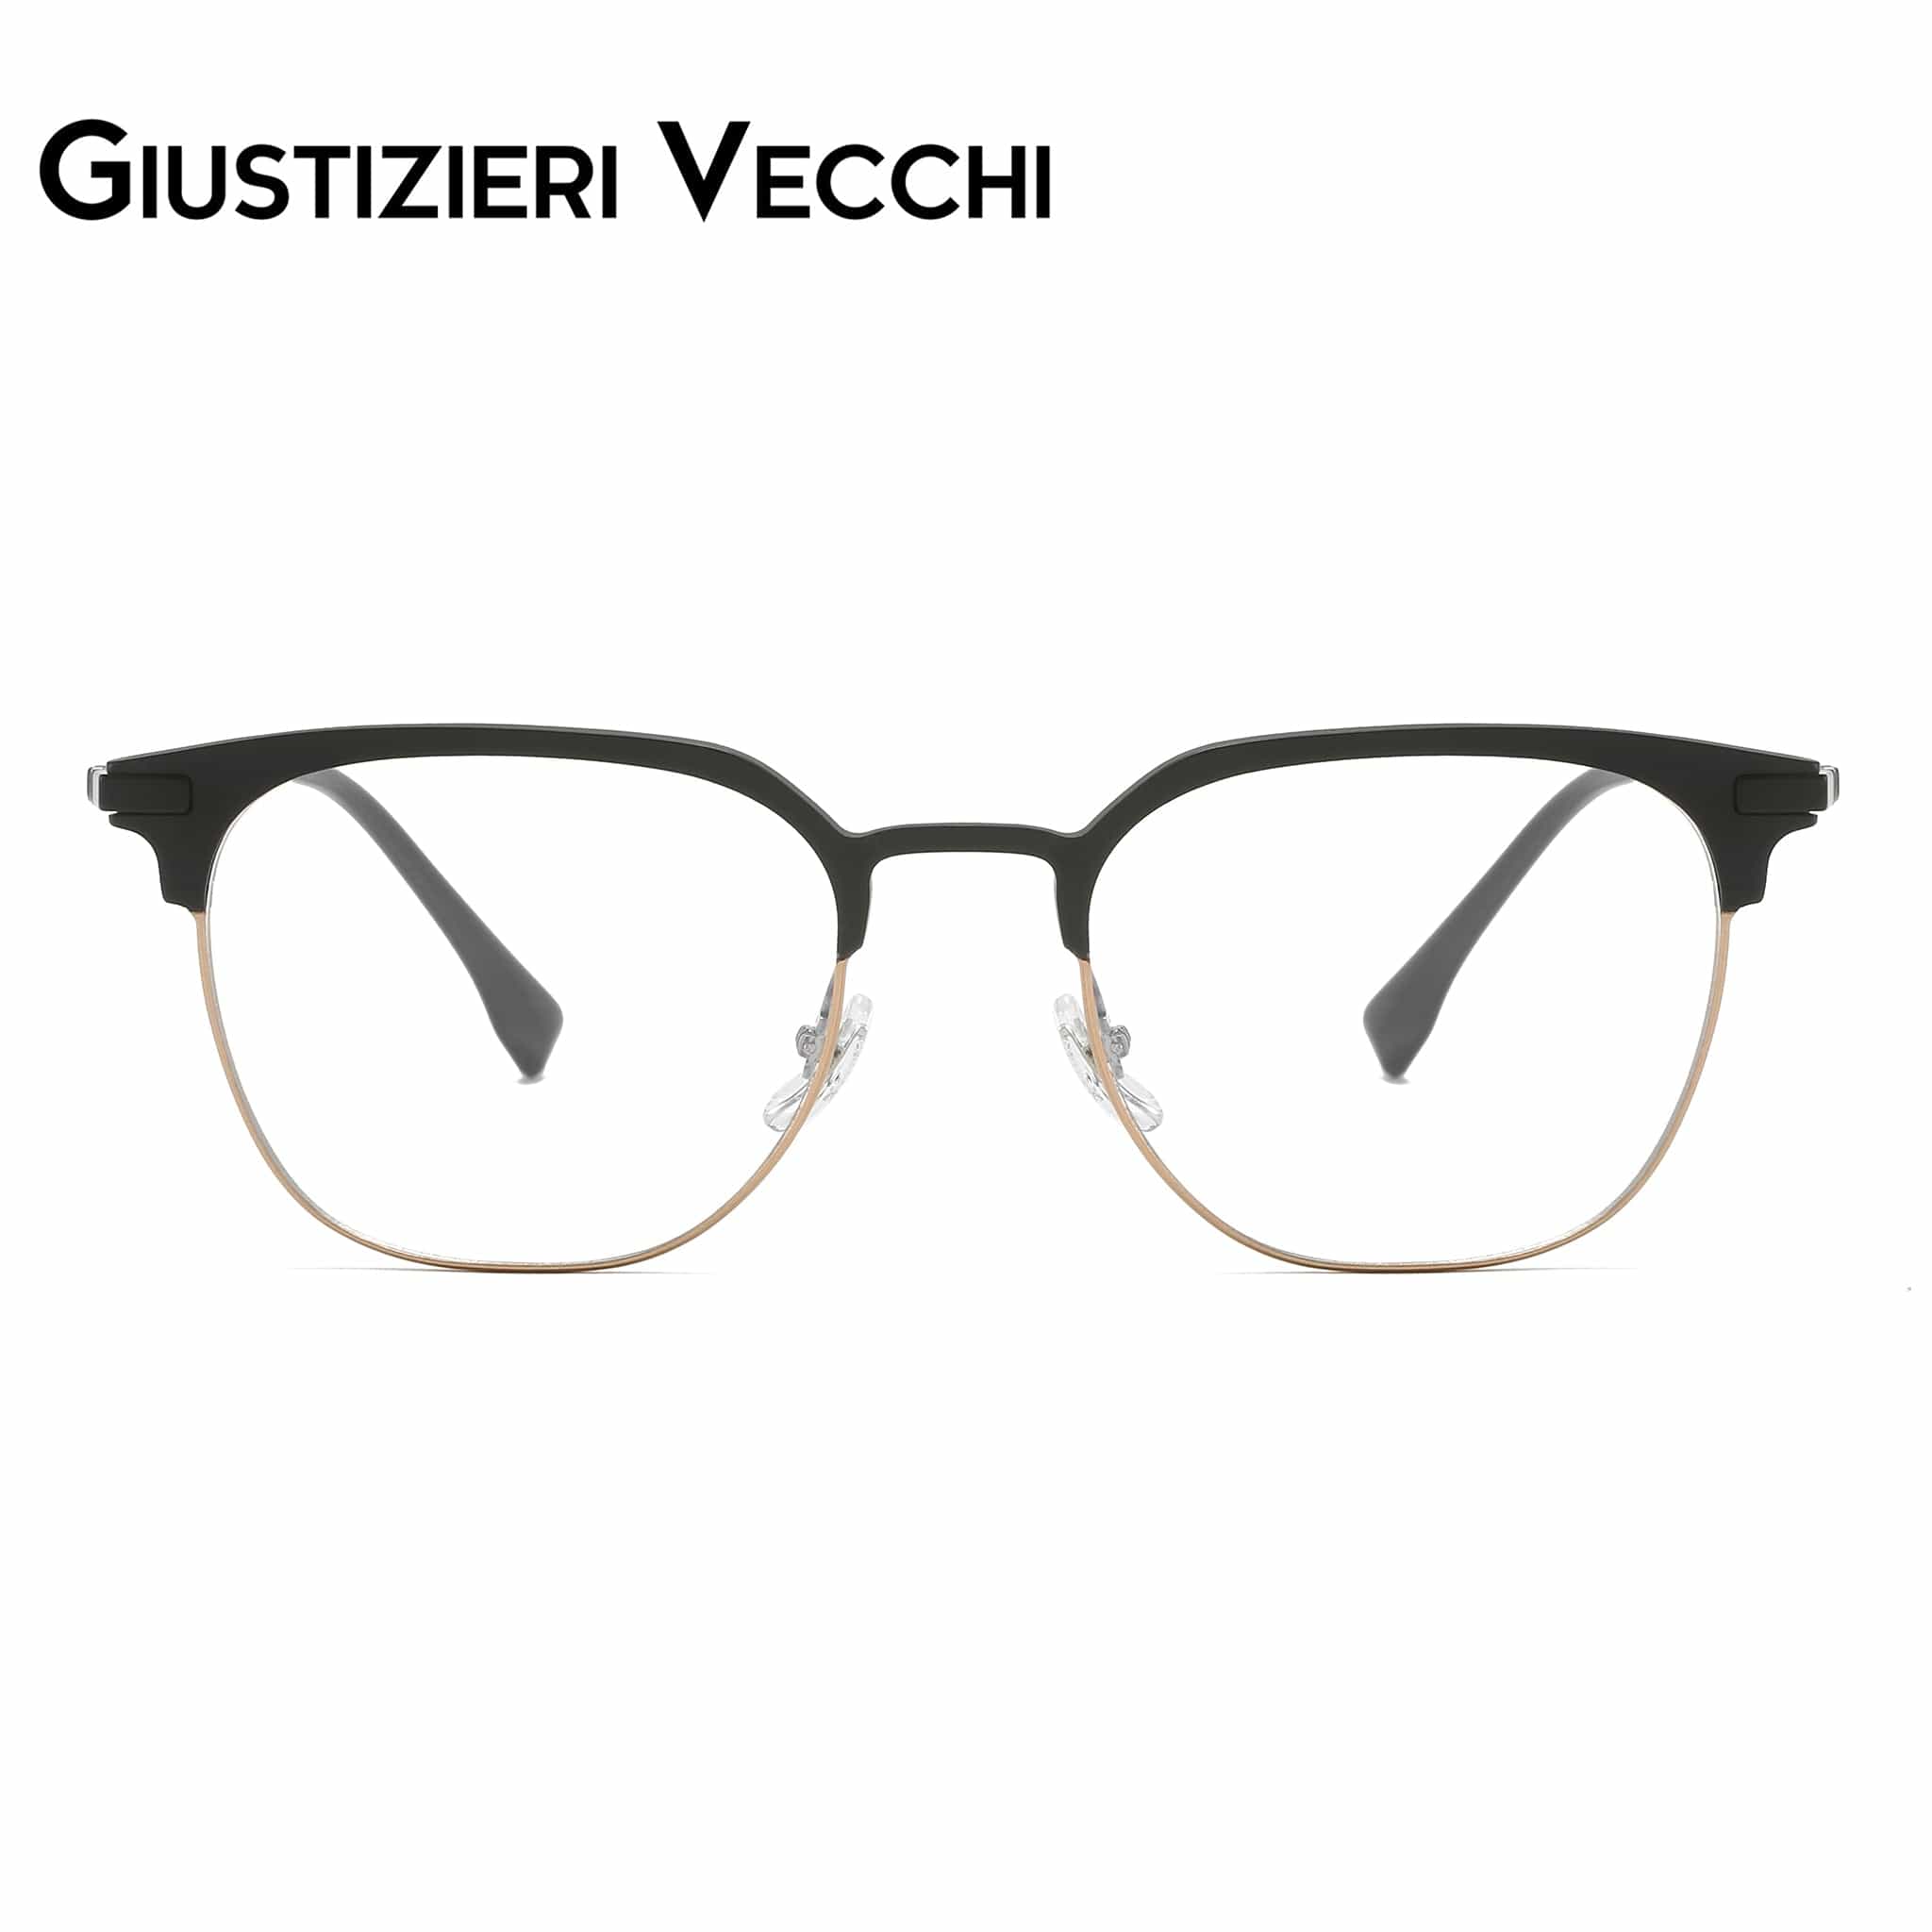 GIUSTIZIERI VECCHI Eyeglasses Small / Black with Gold MindHaze Duo